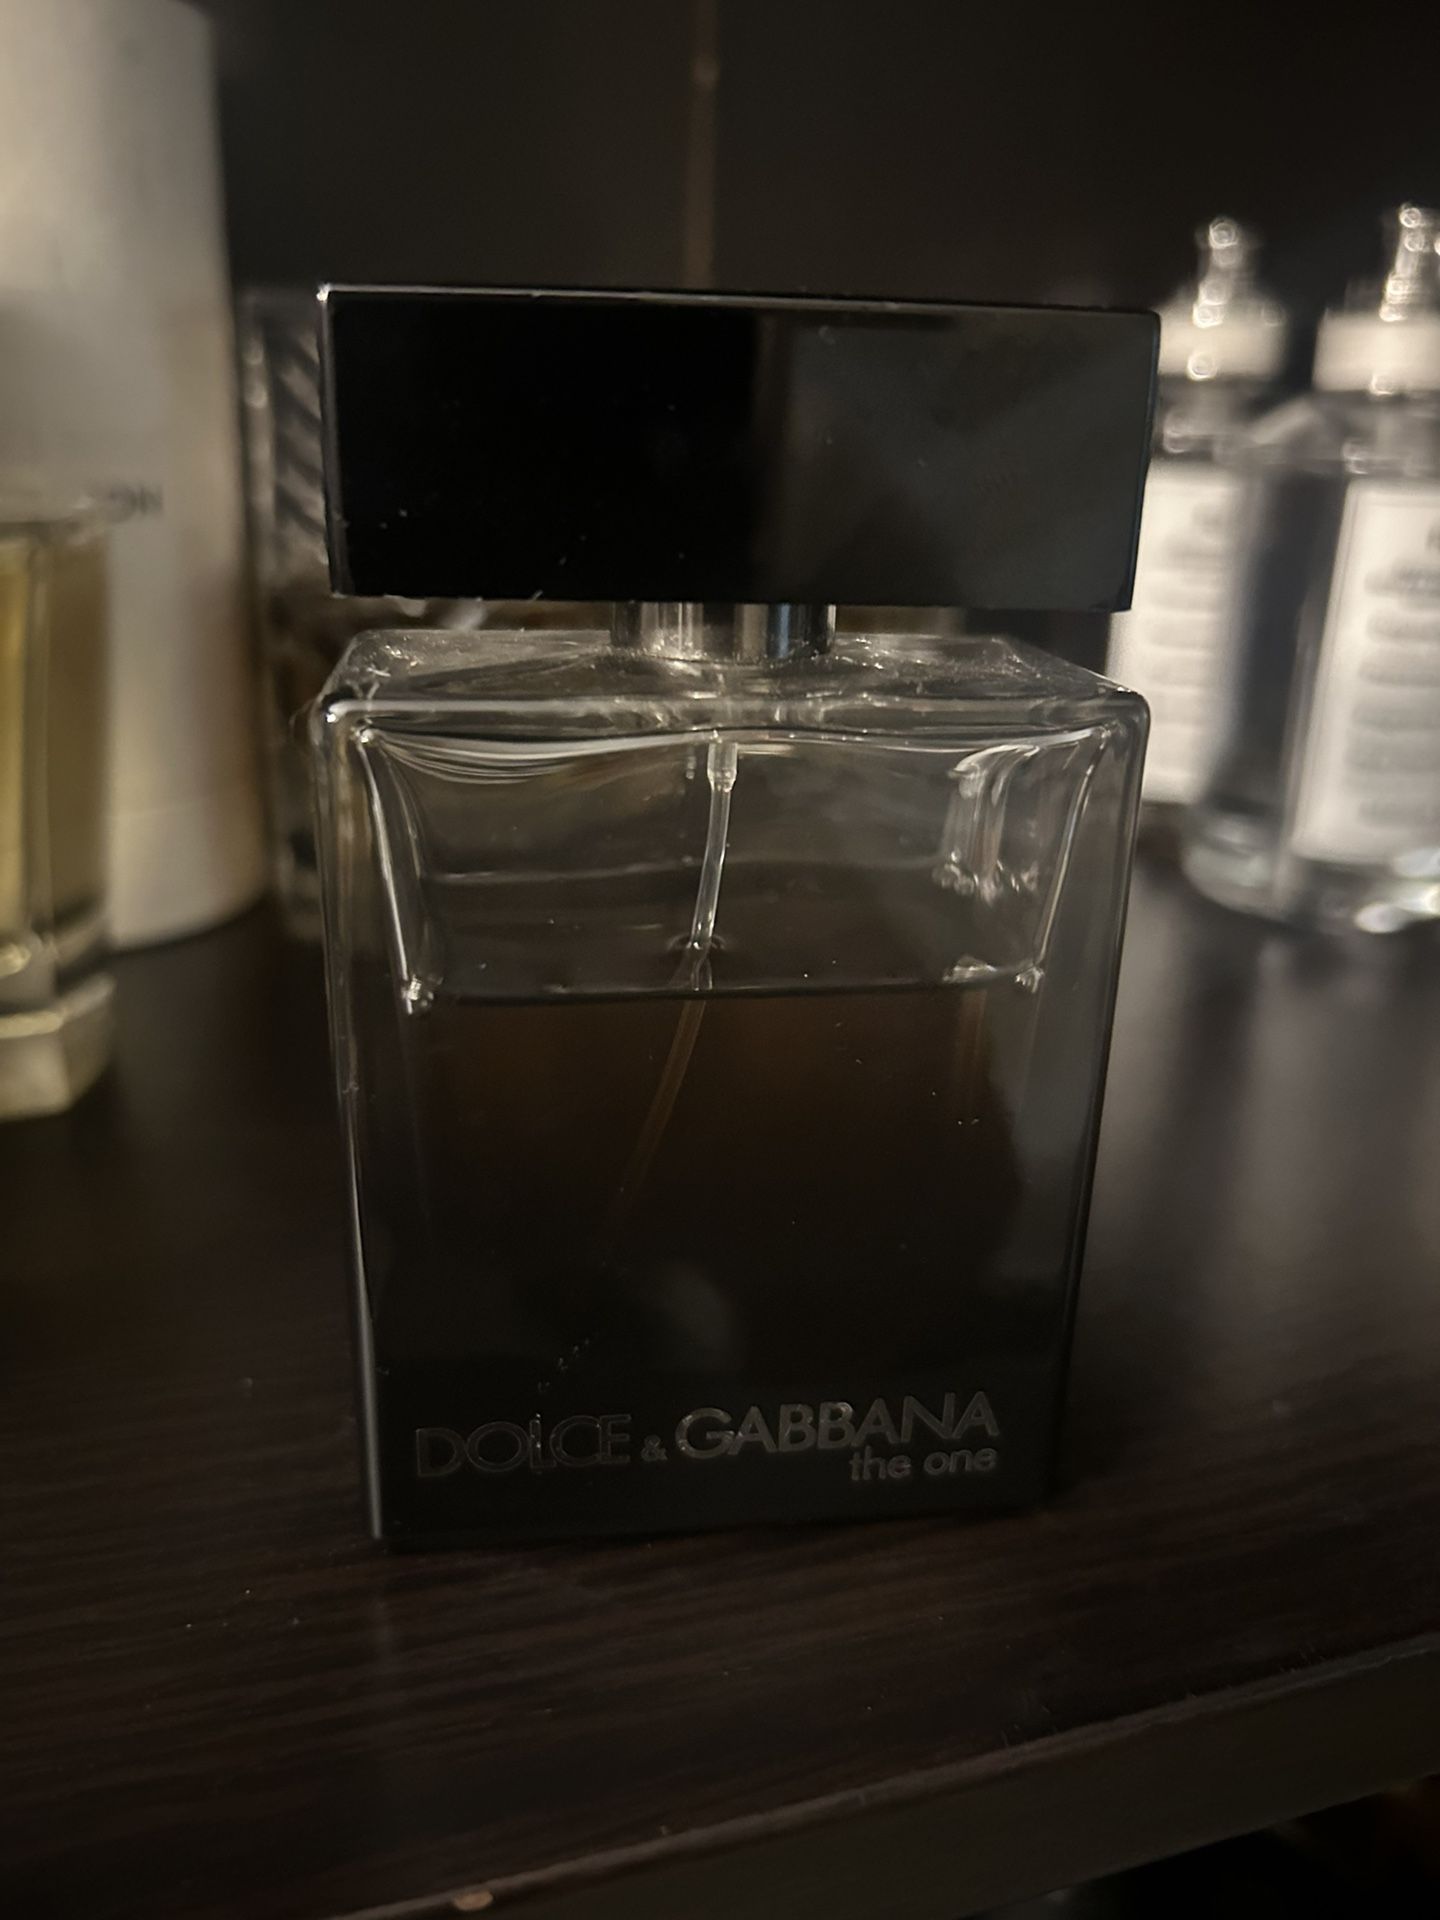 Dolce & Gabbana “The one” EDP 50 Ml